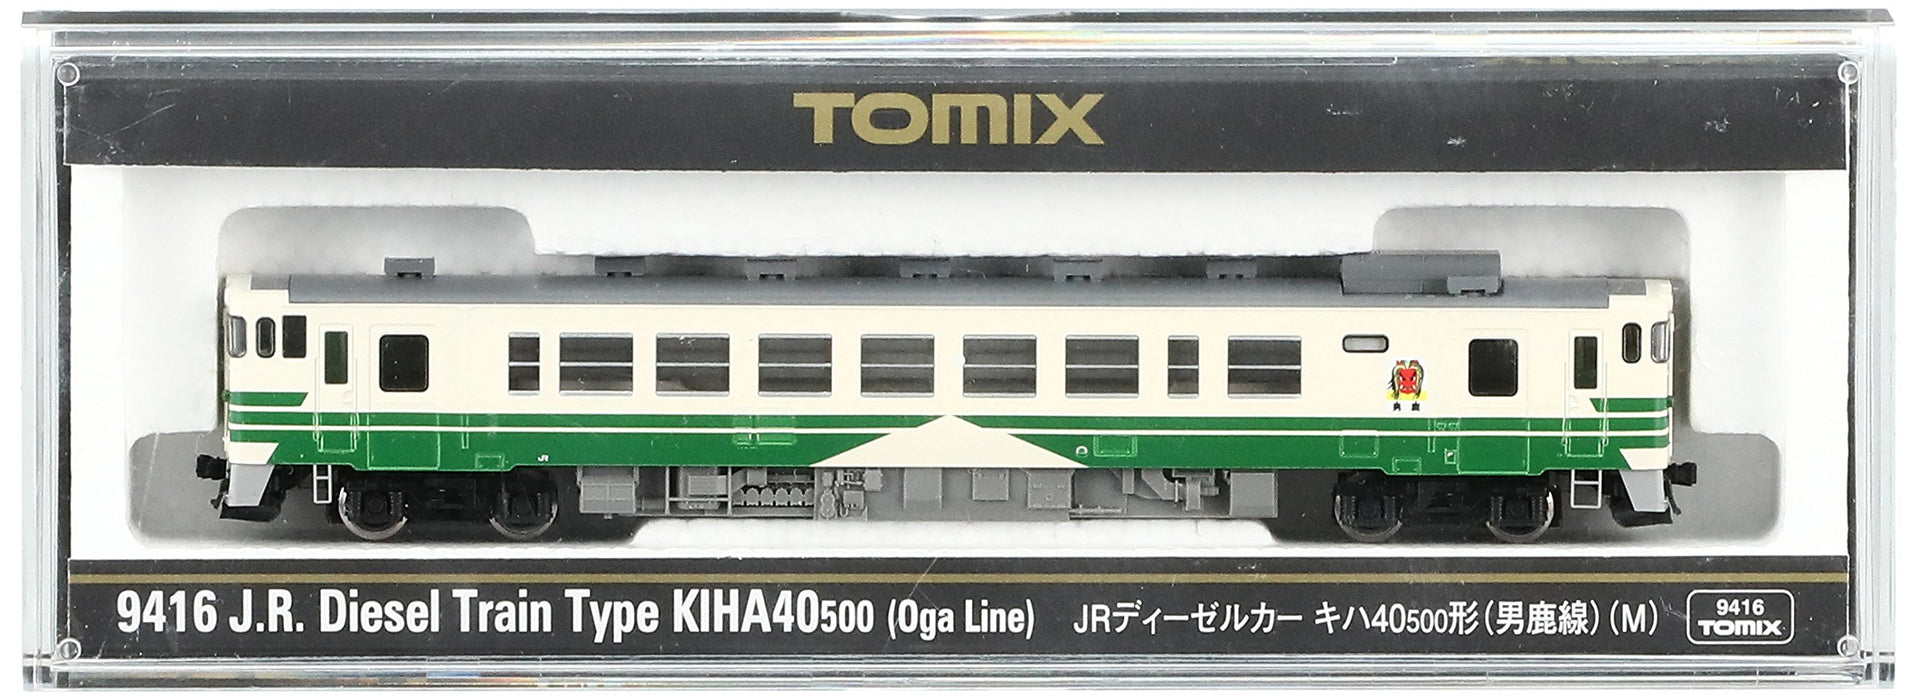 Tomytec Tomix Kiha 40 500 Oga Line M 9416 N voie ferrée modèle voiture Diesel